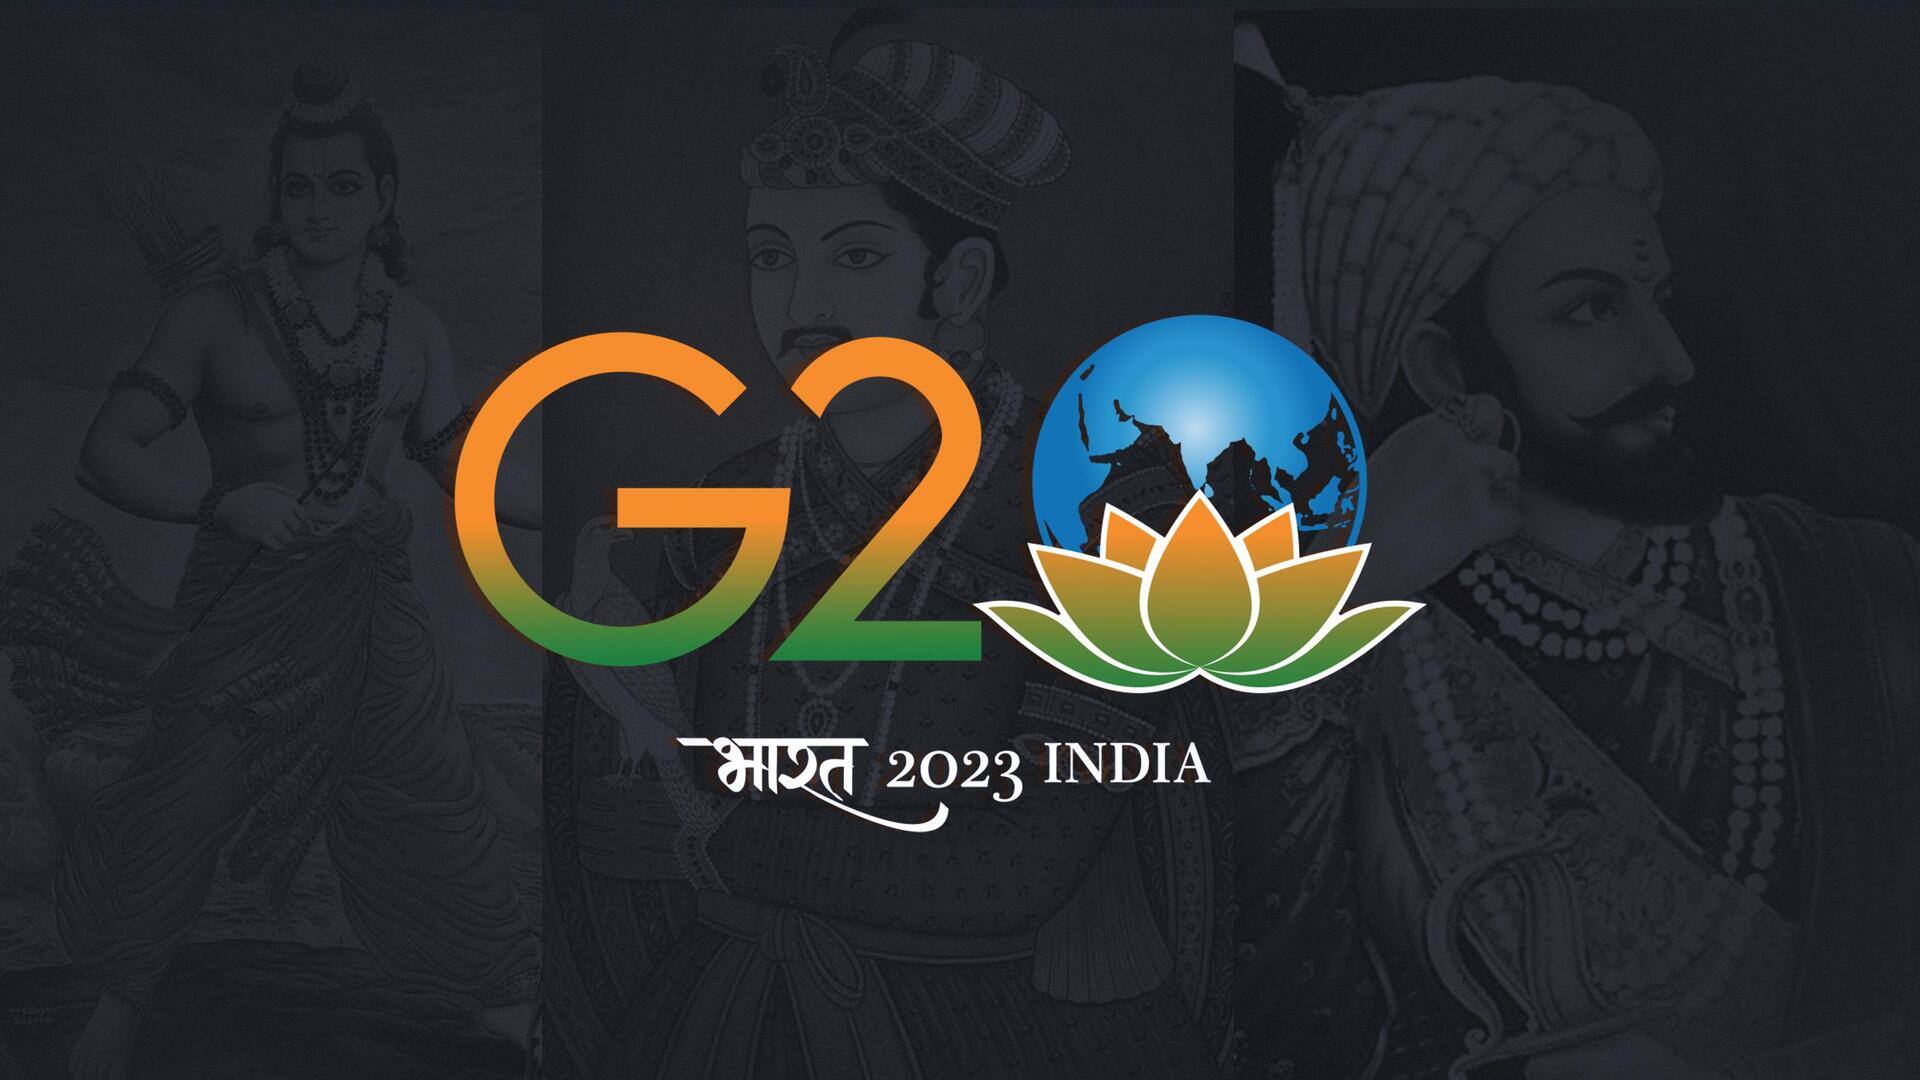 G20 booklet calls Ram, Shivaji, Akbar democratic kings